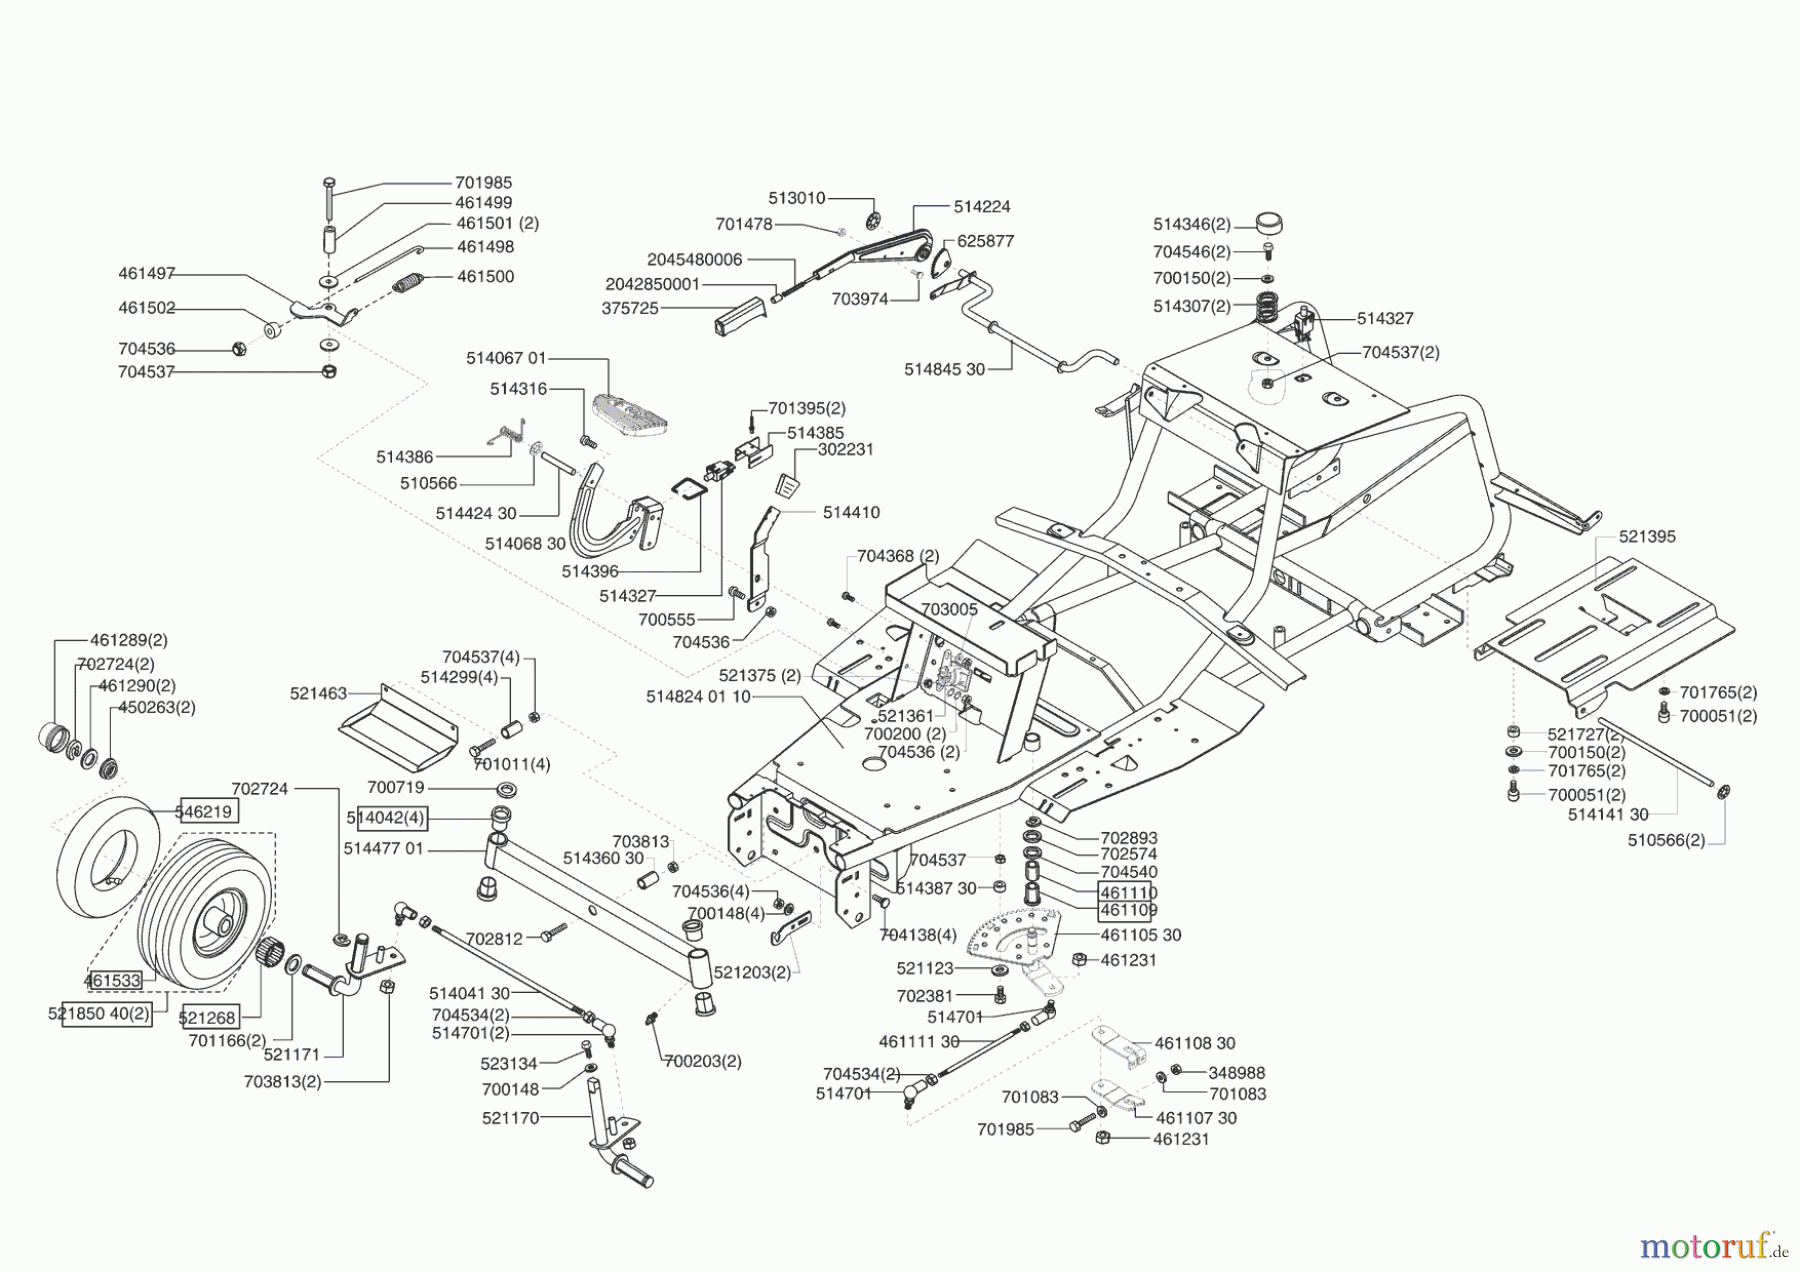  Jardi-Pro Gartentechnik Rasentraktor T 1000 11/2004 - 11/2005 Seite 2